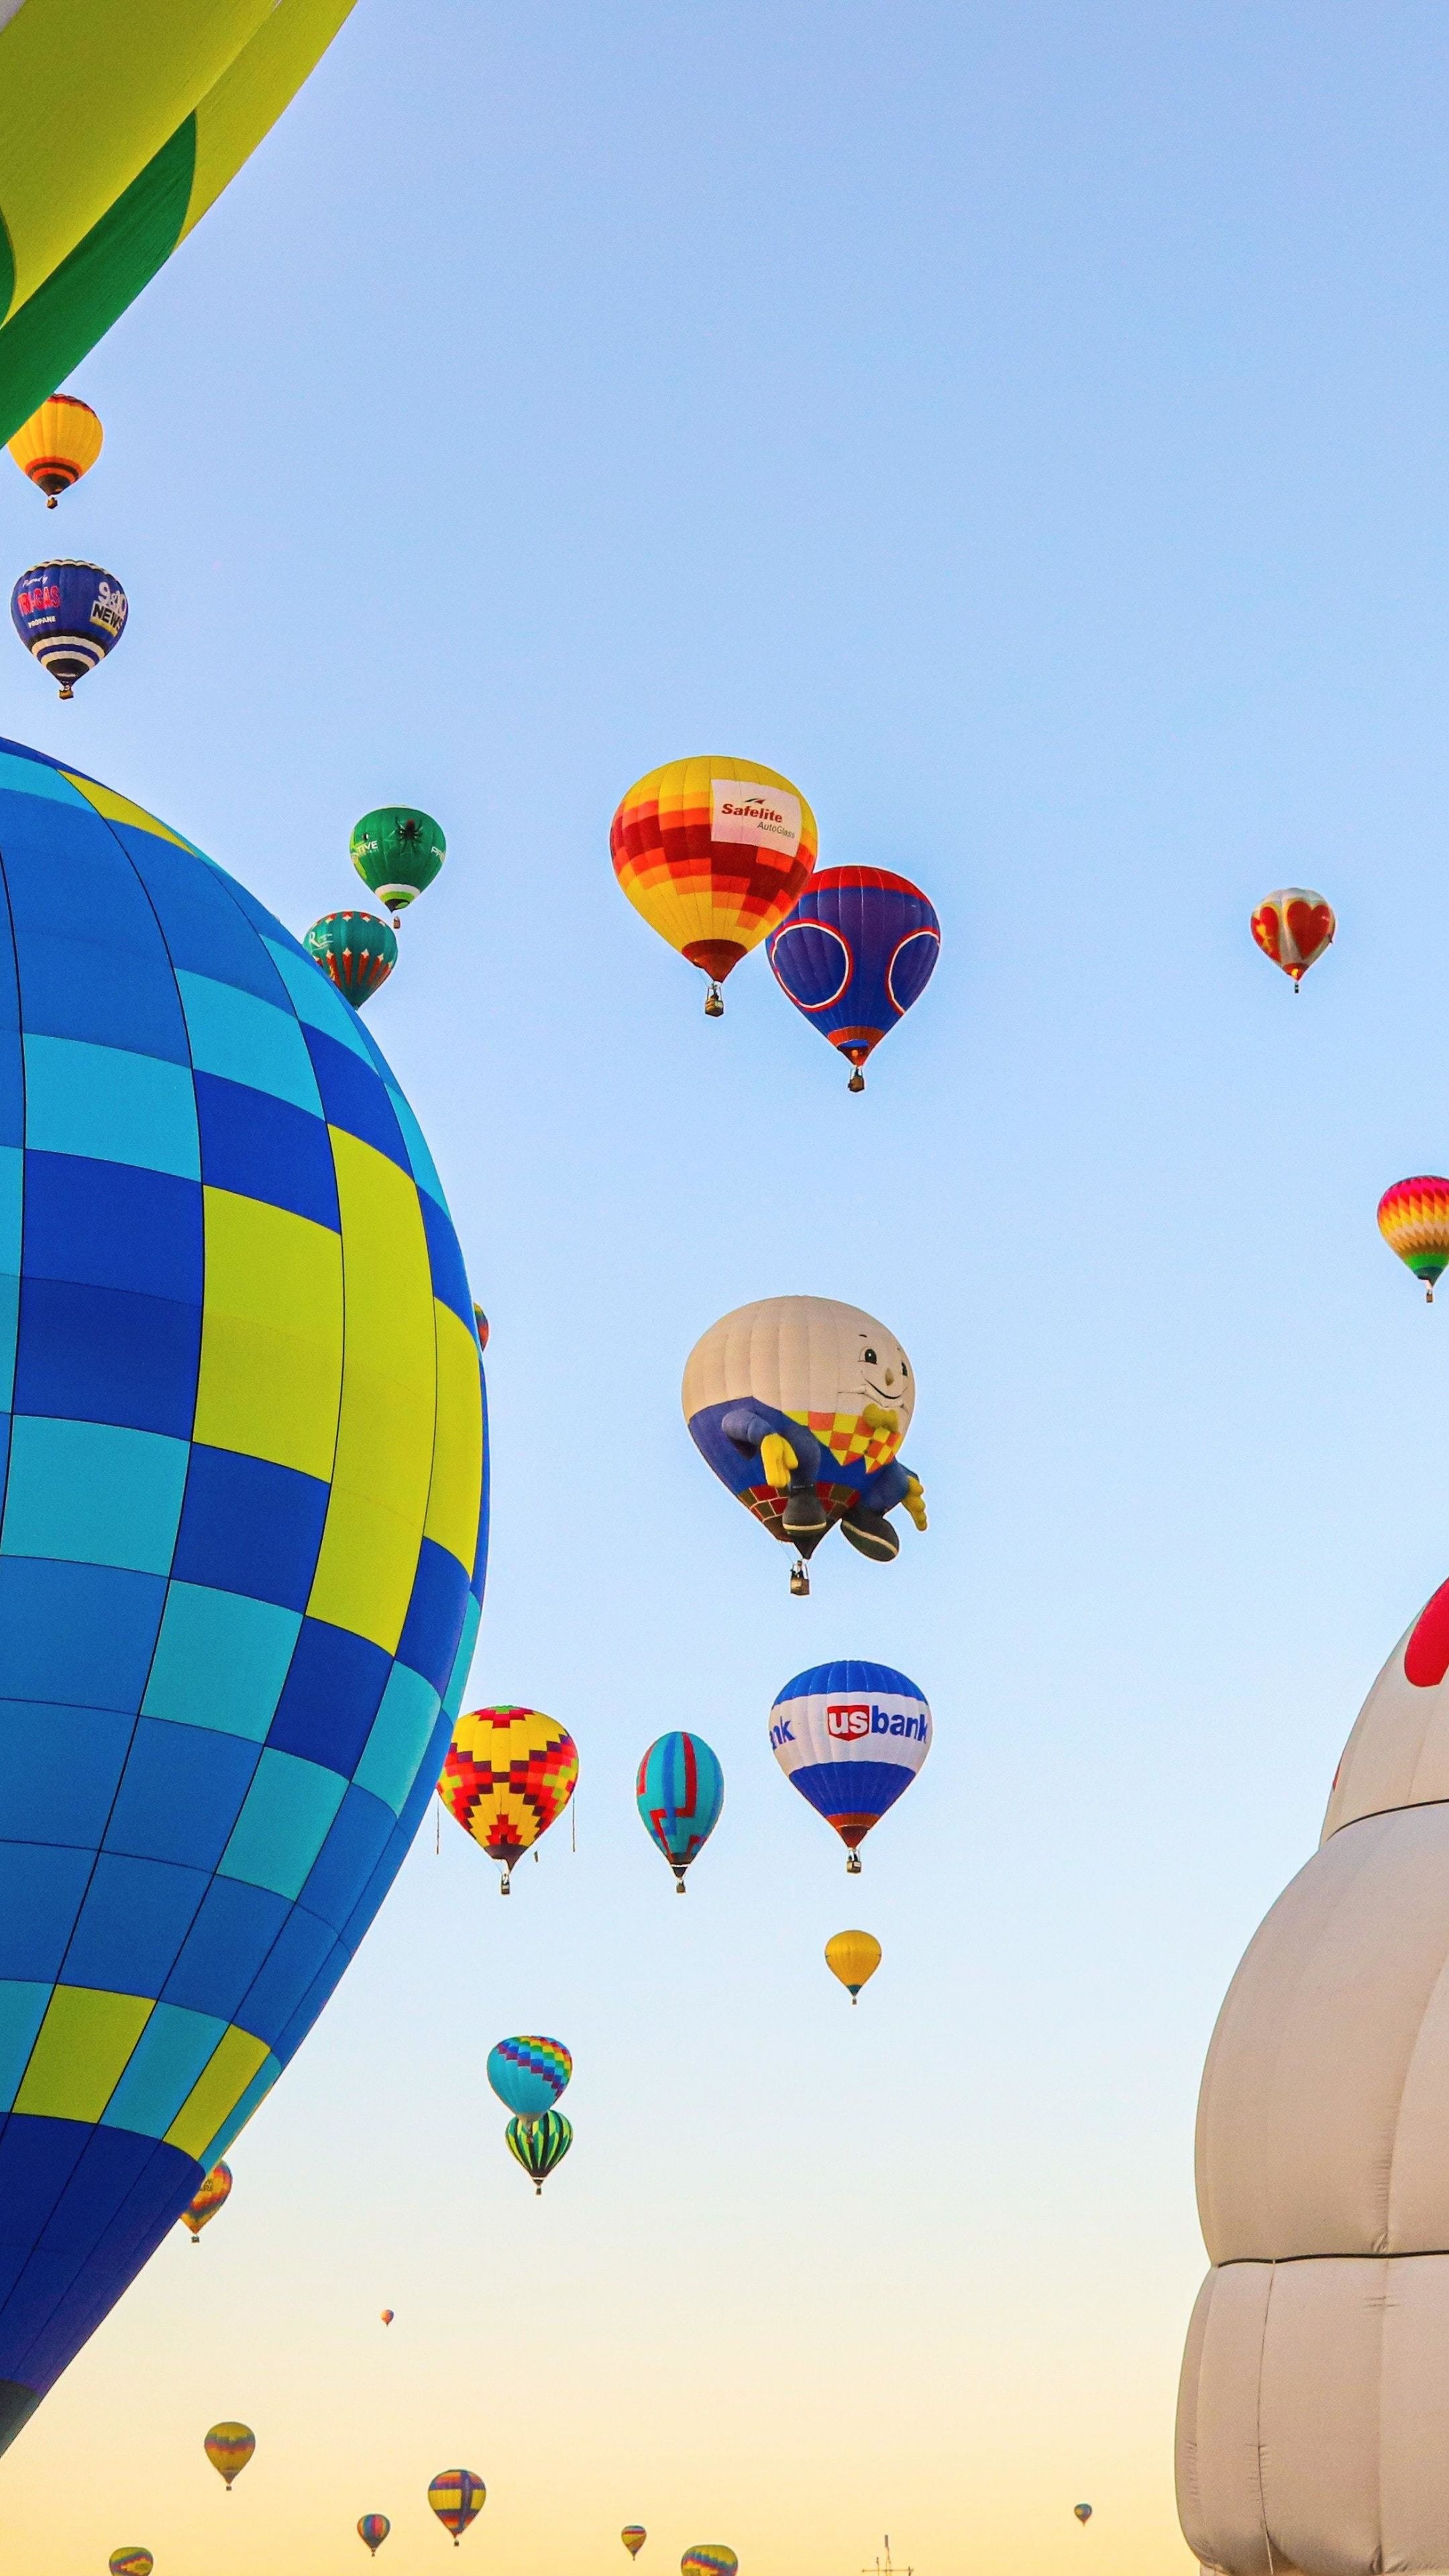 Air Sports: Hot-air balloons festival, Hot air ballooning. 2160x3840 4K Background.